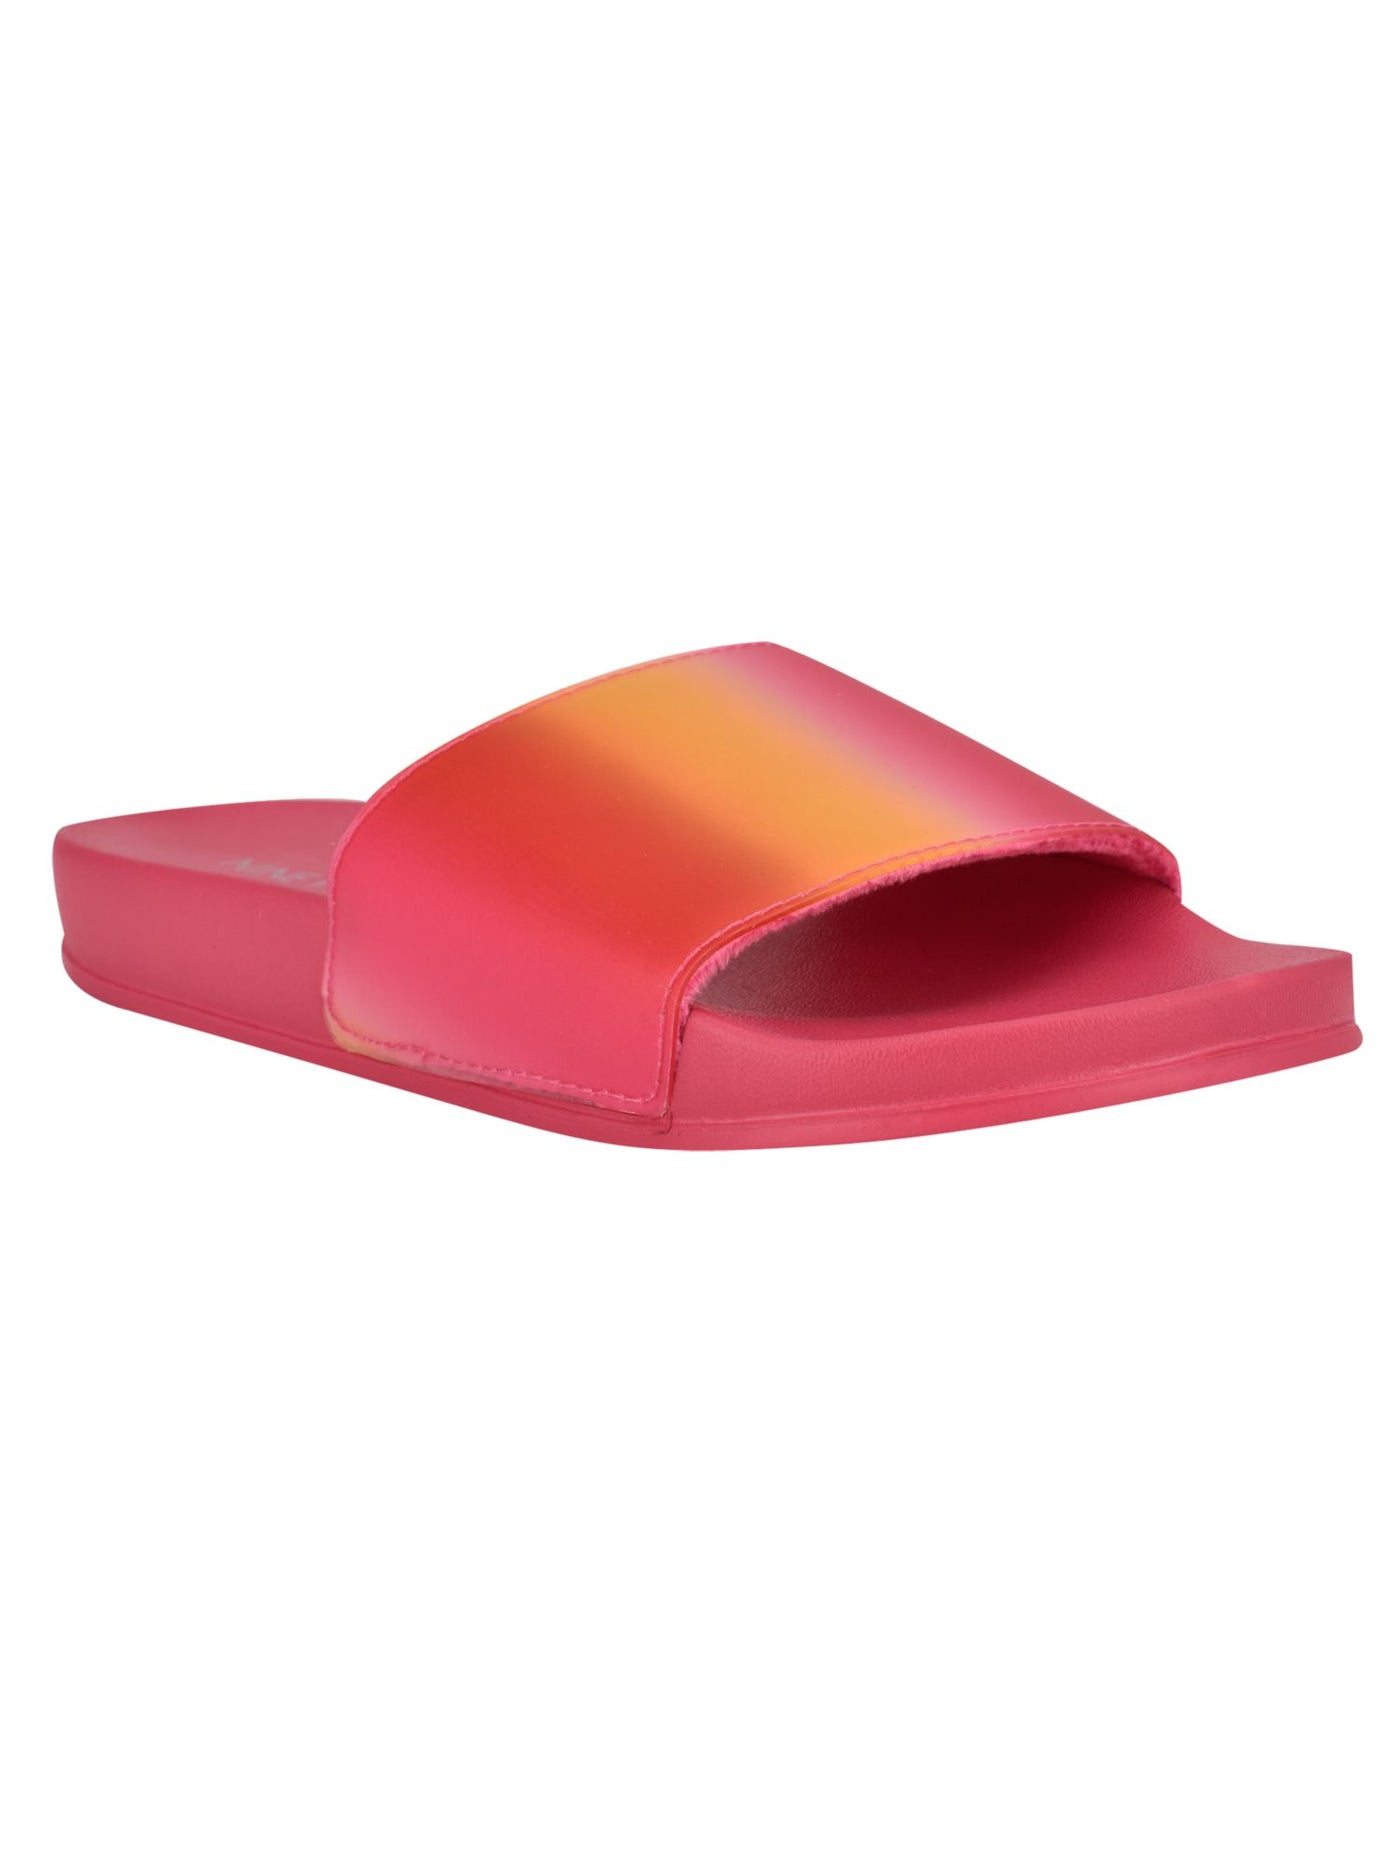 NINE WEST Womens Pink Gradient Comfort Sand Bar Round Toe Wedge Slip On Slide Sandals Shoes 9 M